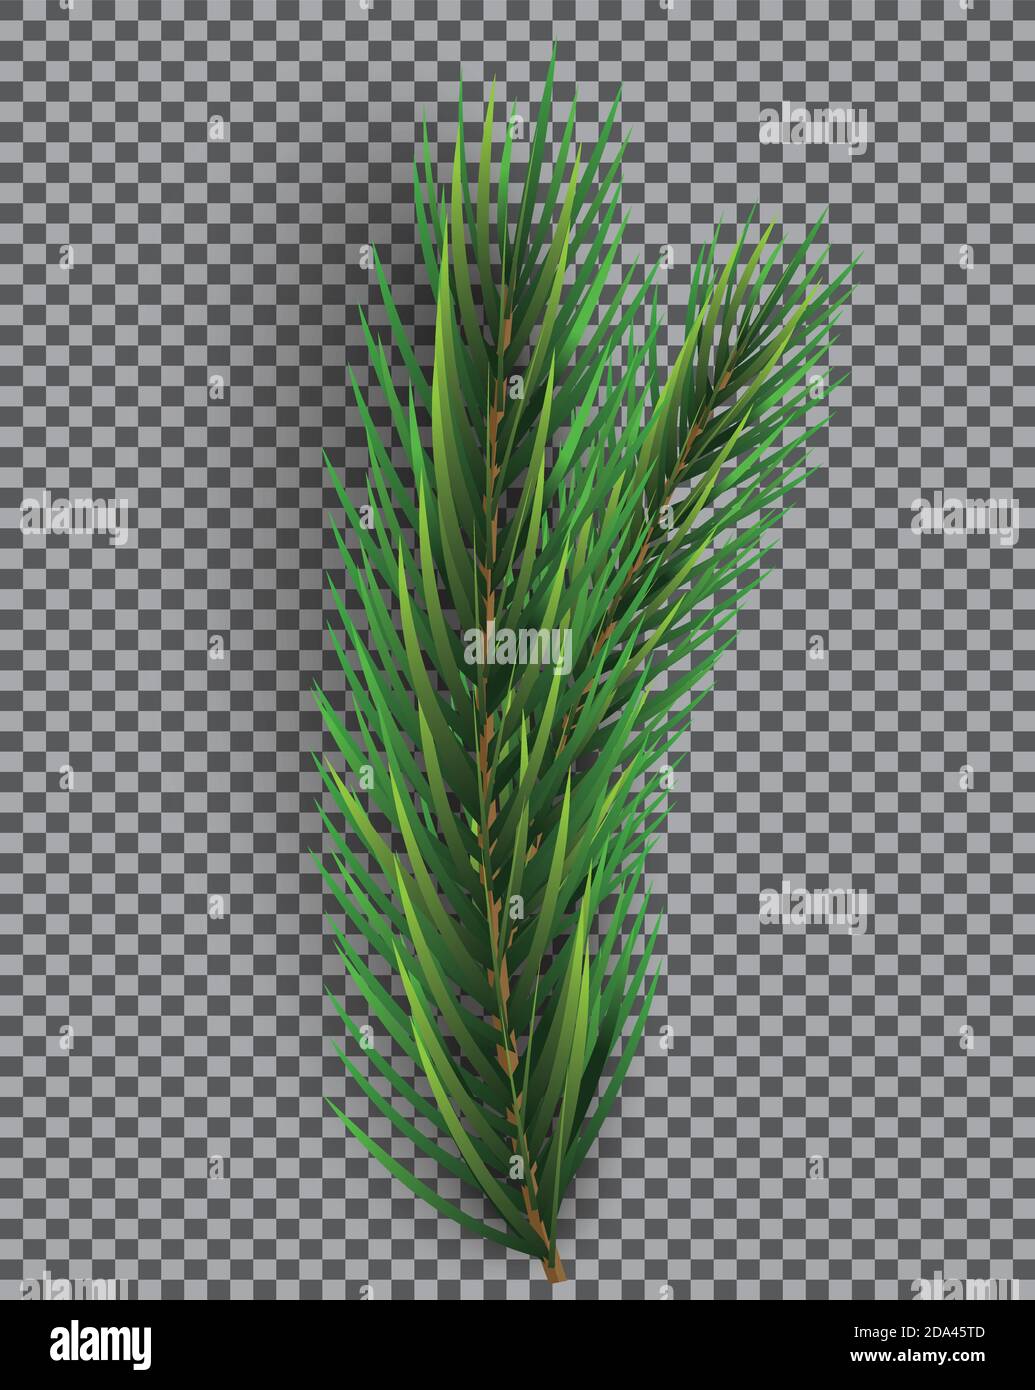 Fir Branch. Christmas Tree. Vector Illustration. Pine Sprig on Transparent Grid Background. Stock Vector